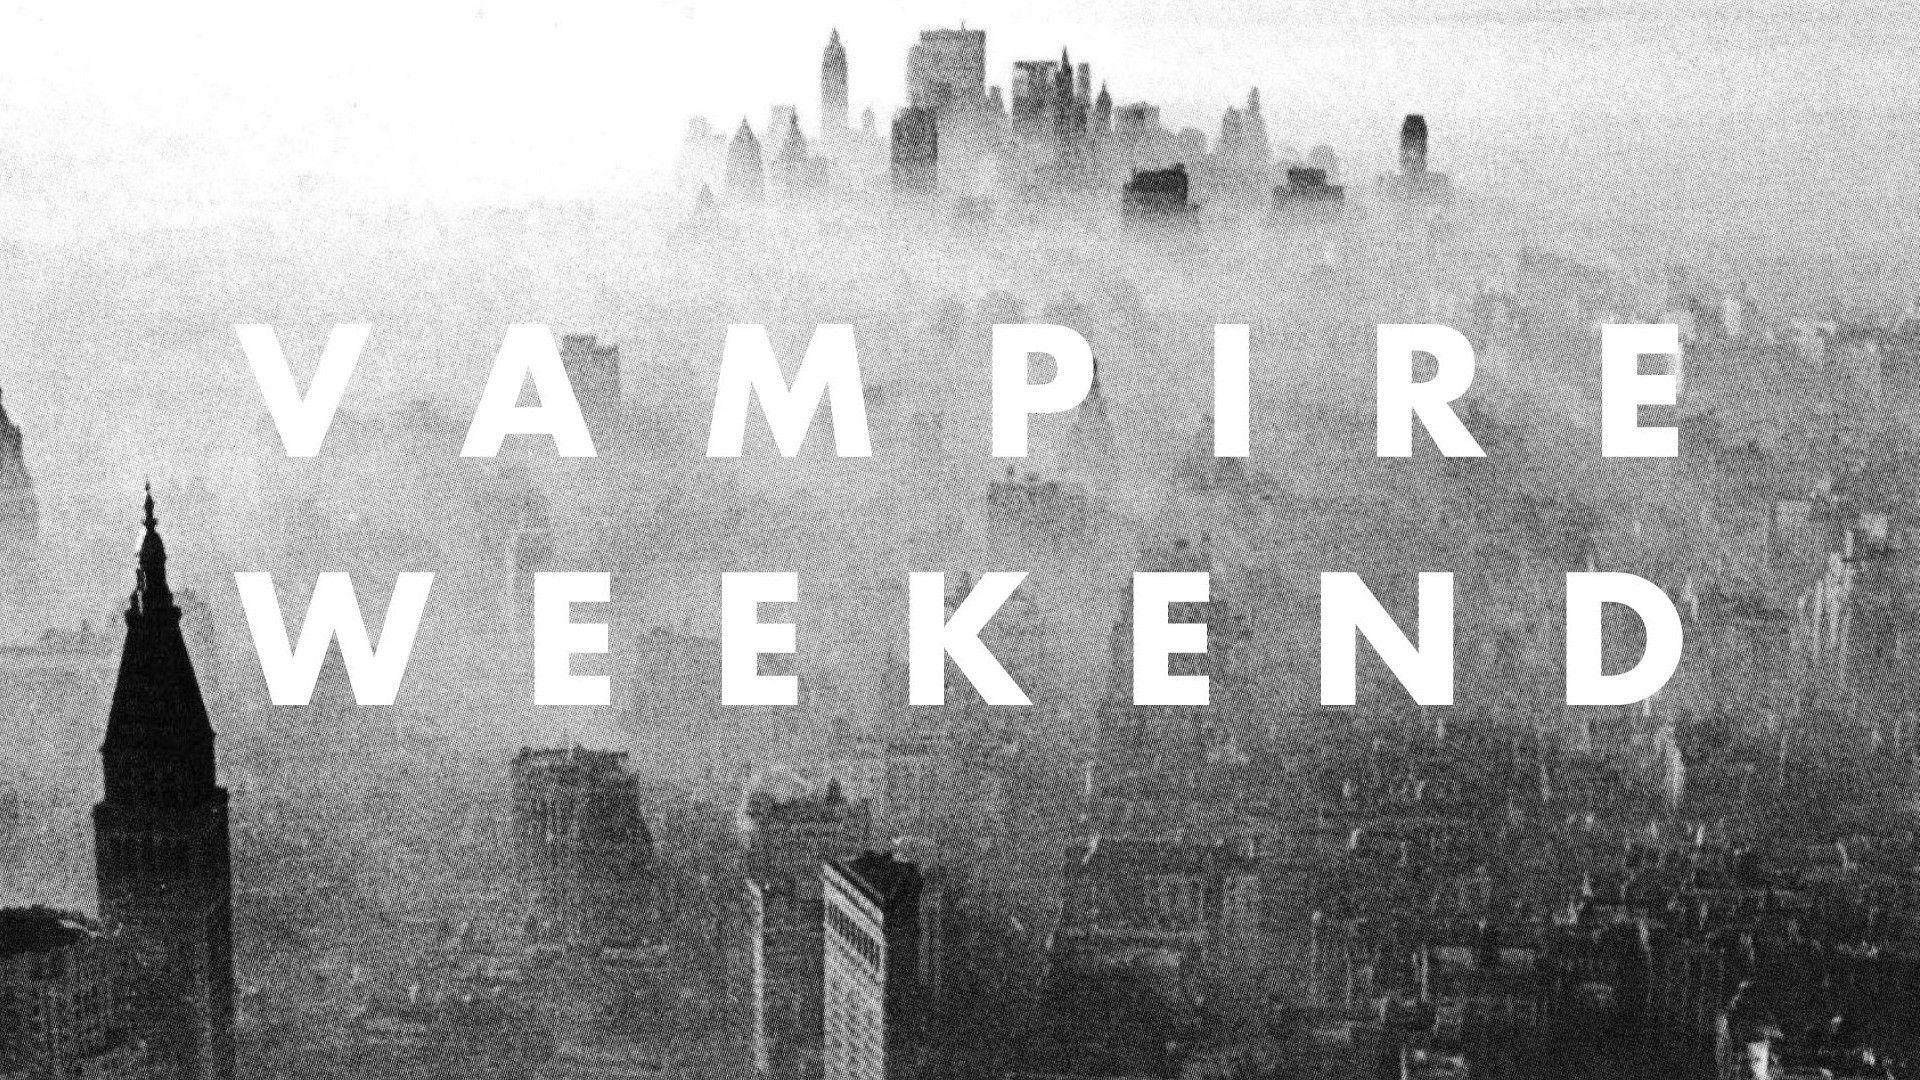 Rock band vampire weekend cover art indie wallpaper. AllWallpaper